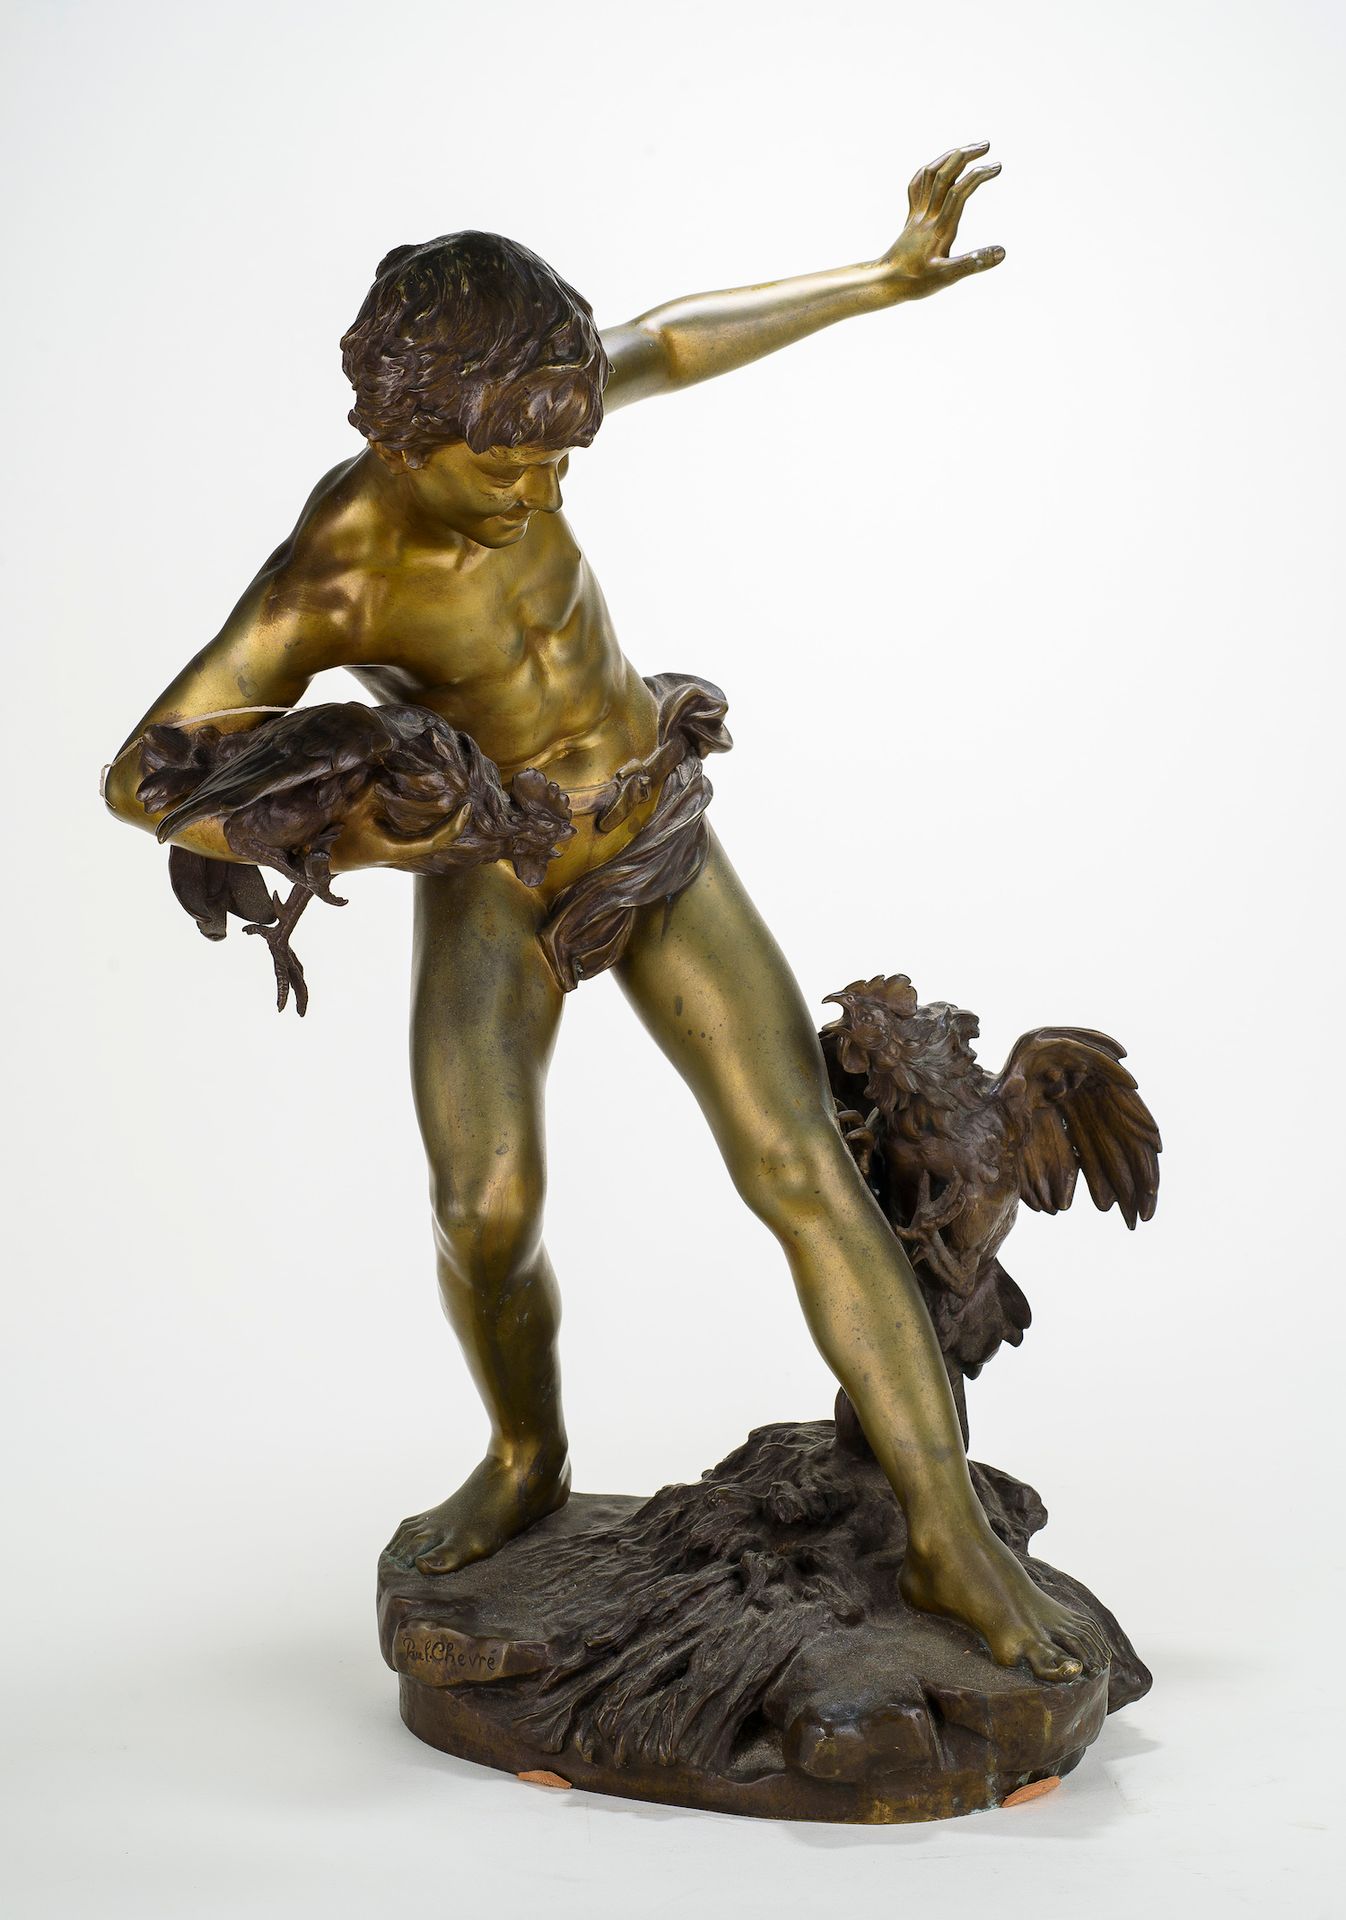 Null 保罗-罗曼-舍夫雷(1867-1914)

年轻男孩与公鸡

带有镀金光泽的青铜器，老式铸件

在露台上签名

高度：75厘米